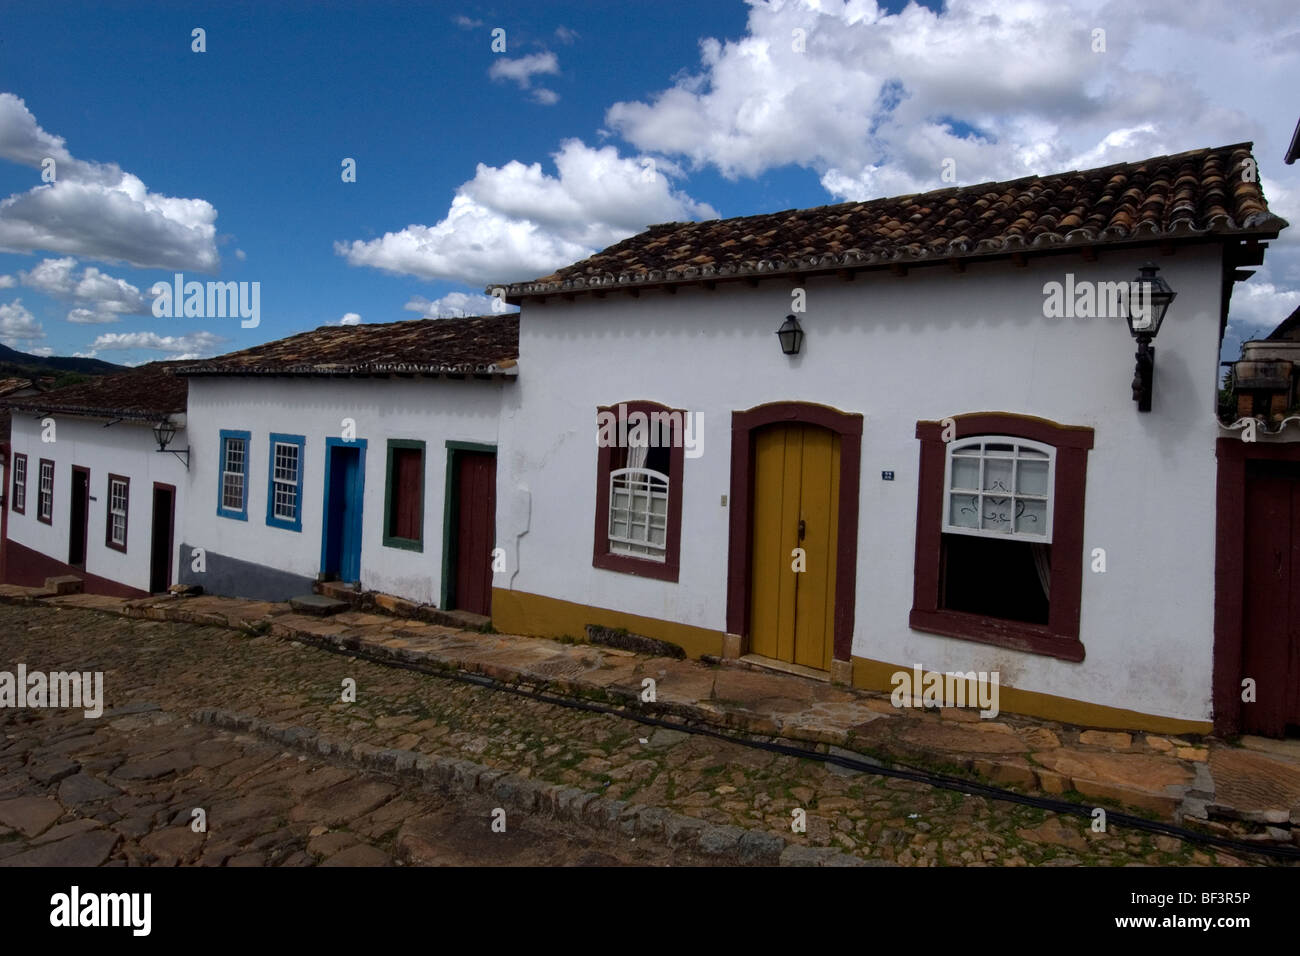 Camara street with historical colonial houses, Tiradentes, Minas Gerais, Brazil Stock Photo